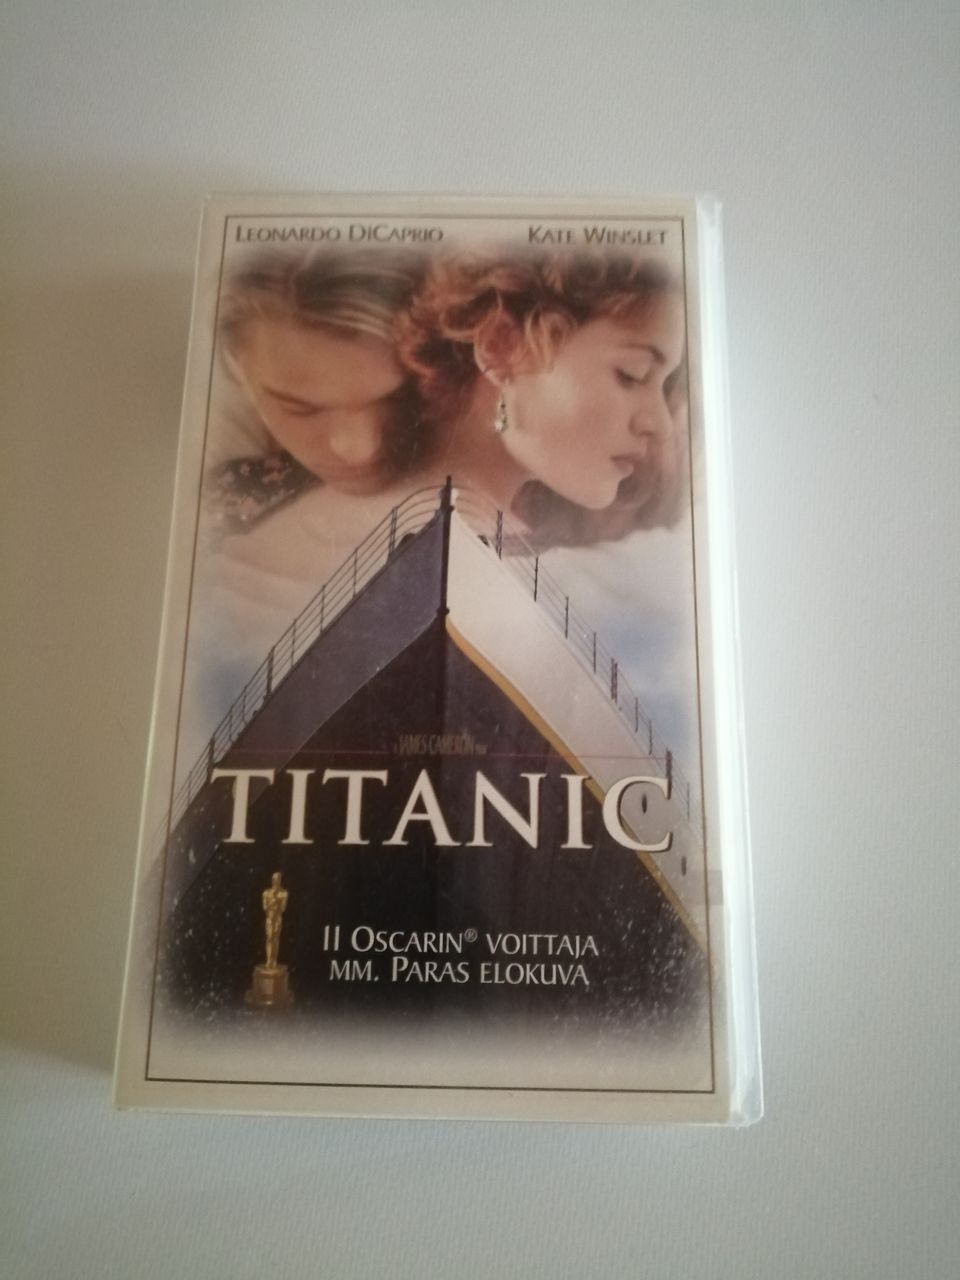 VHS Titanic